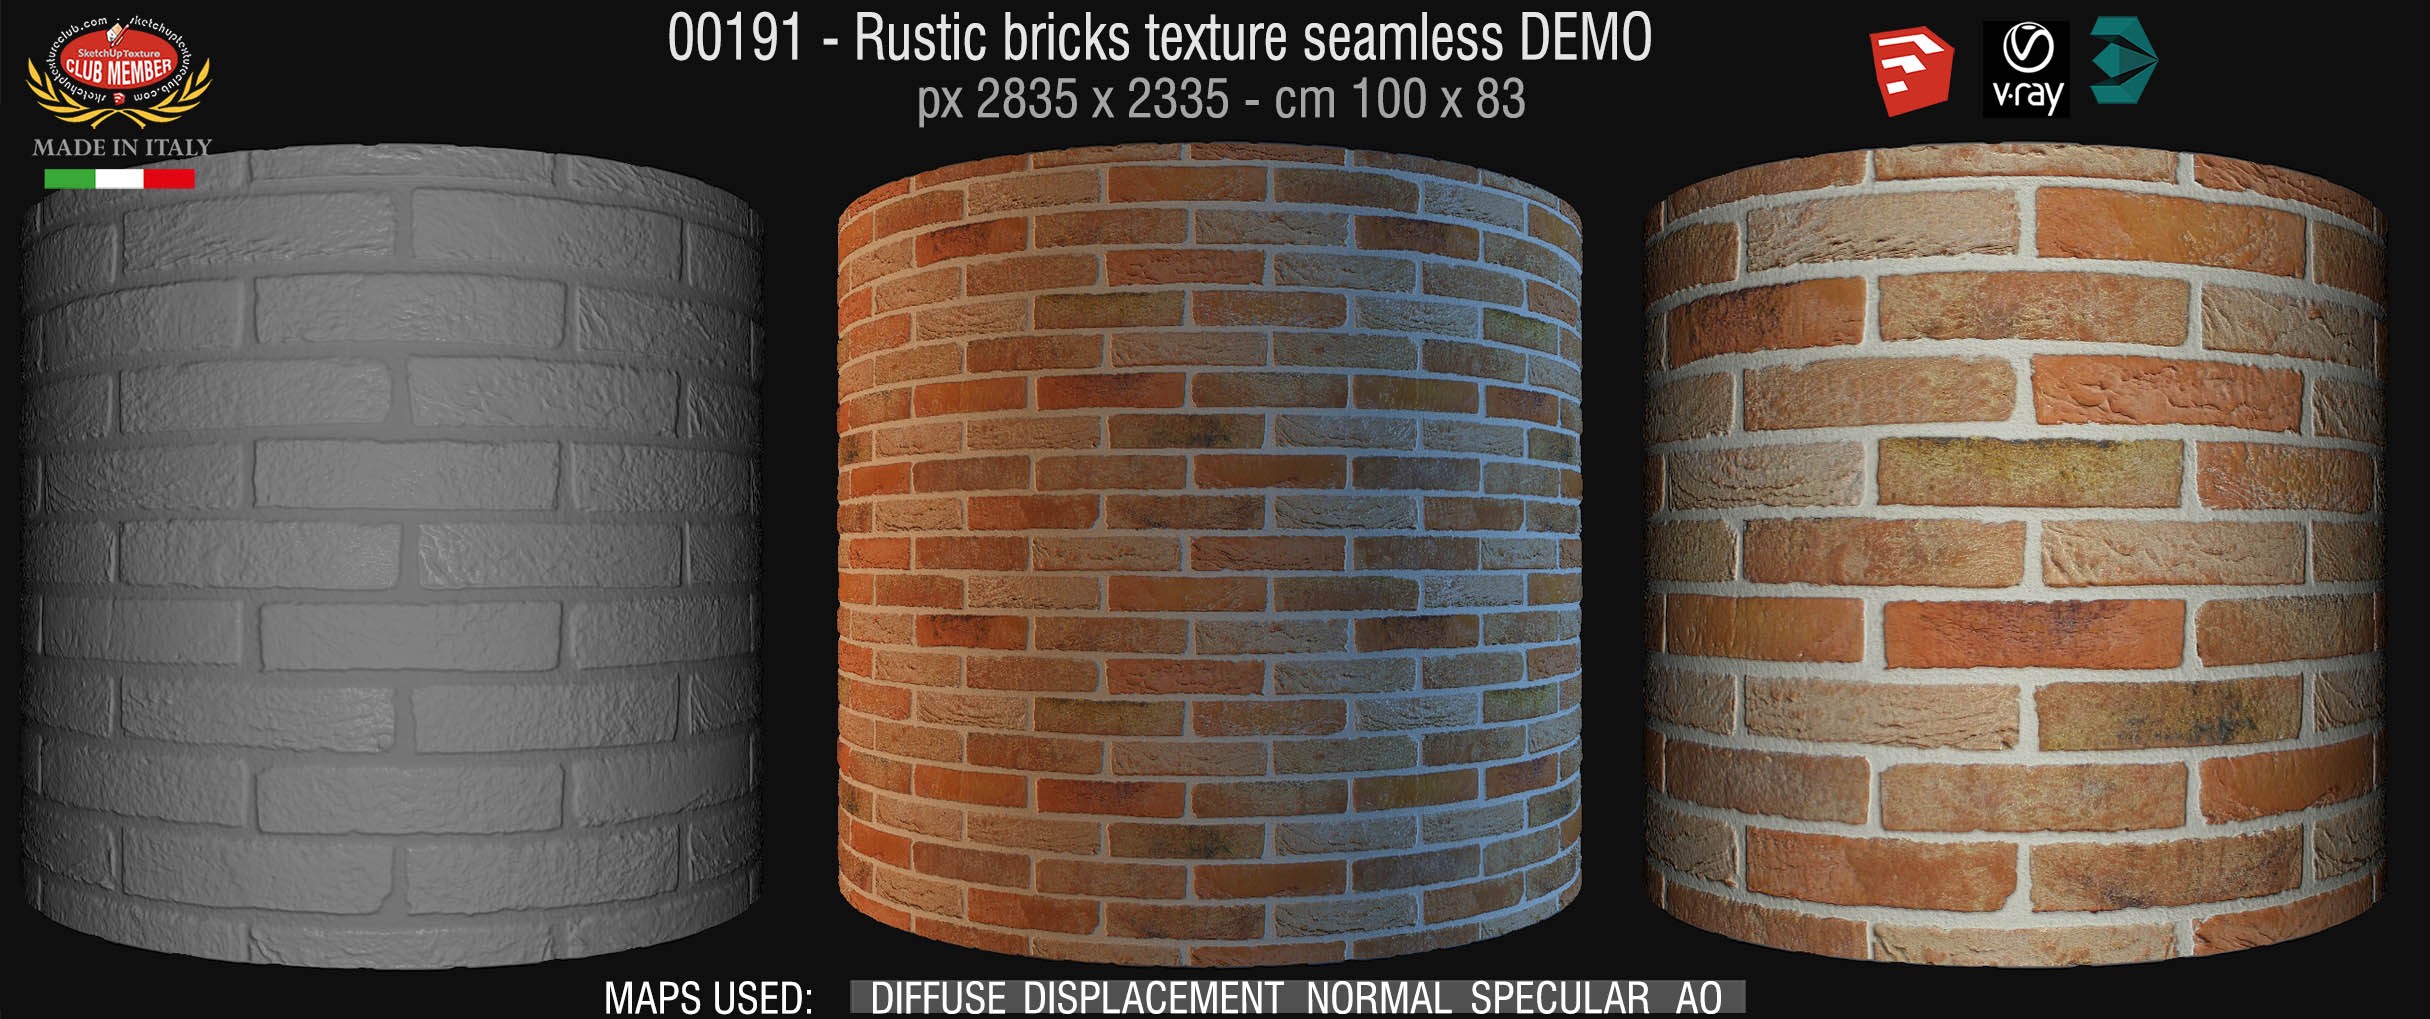 00191 Rustic bricks texture seamless + maps DEMO